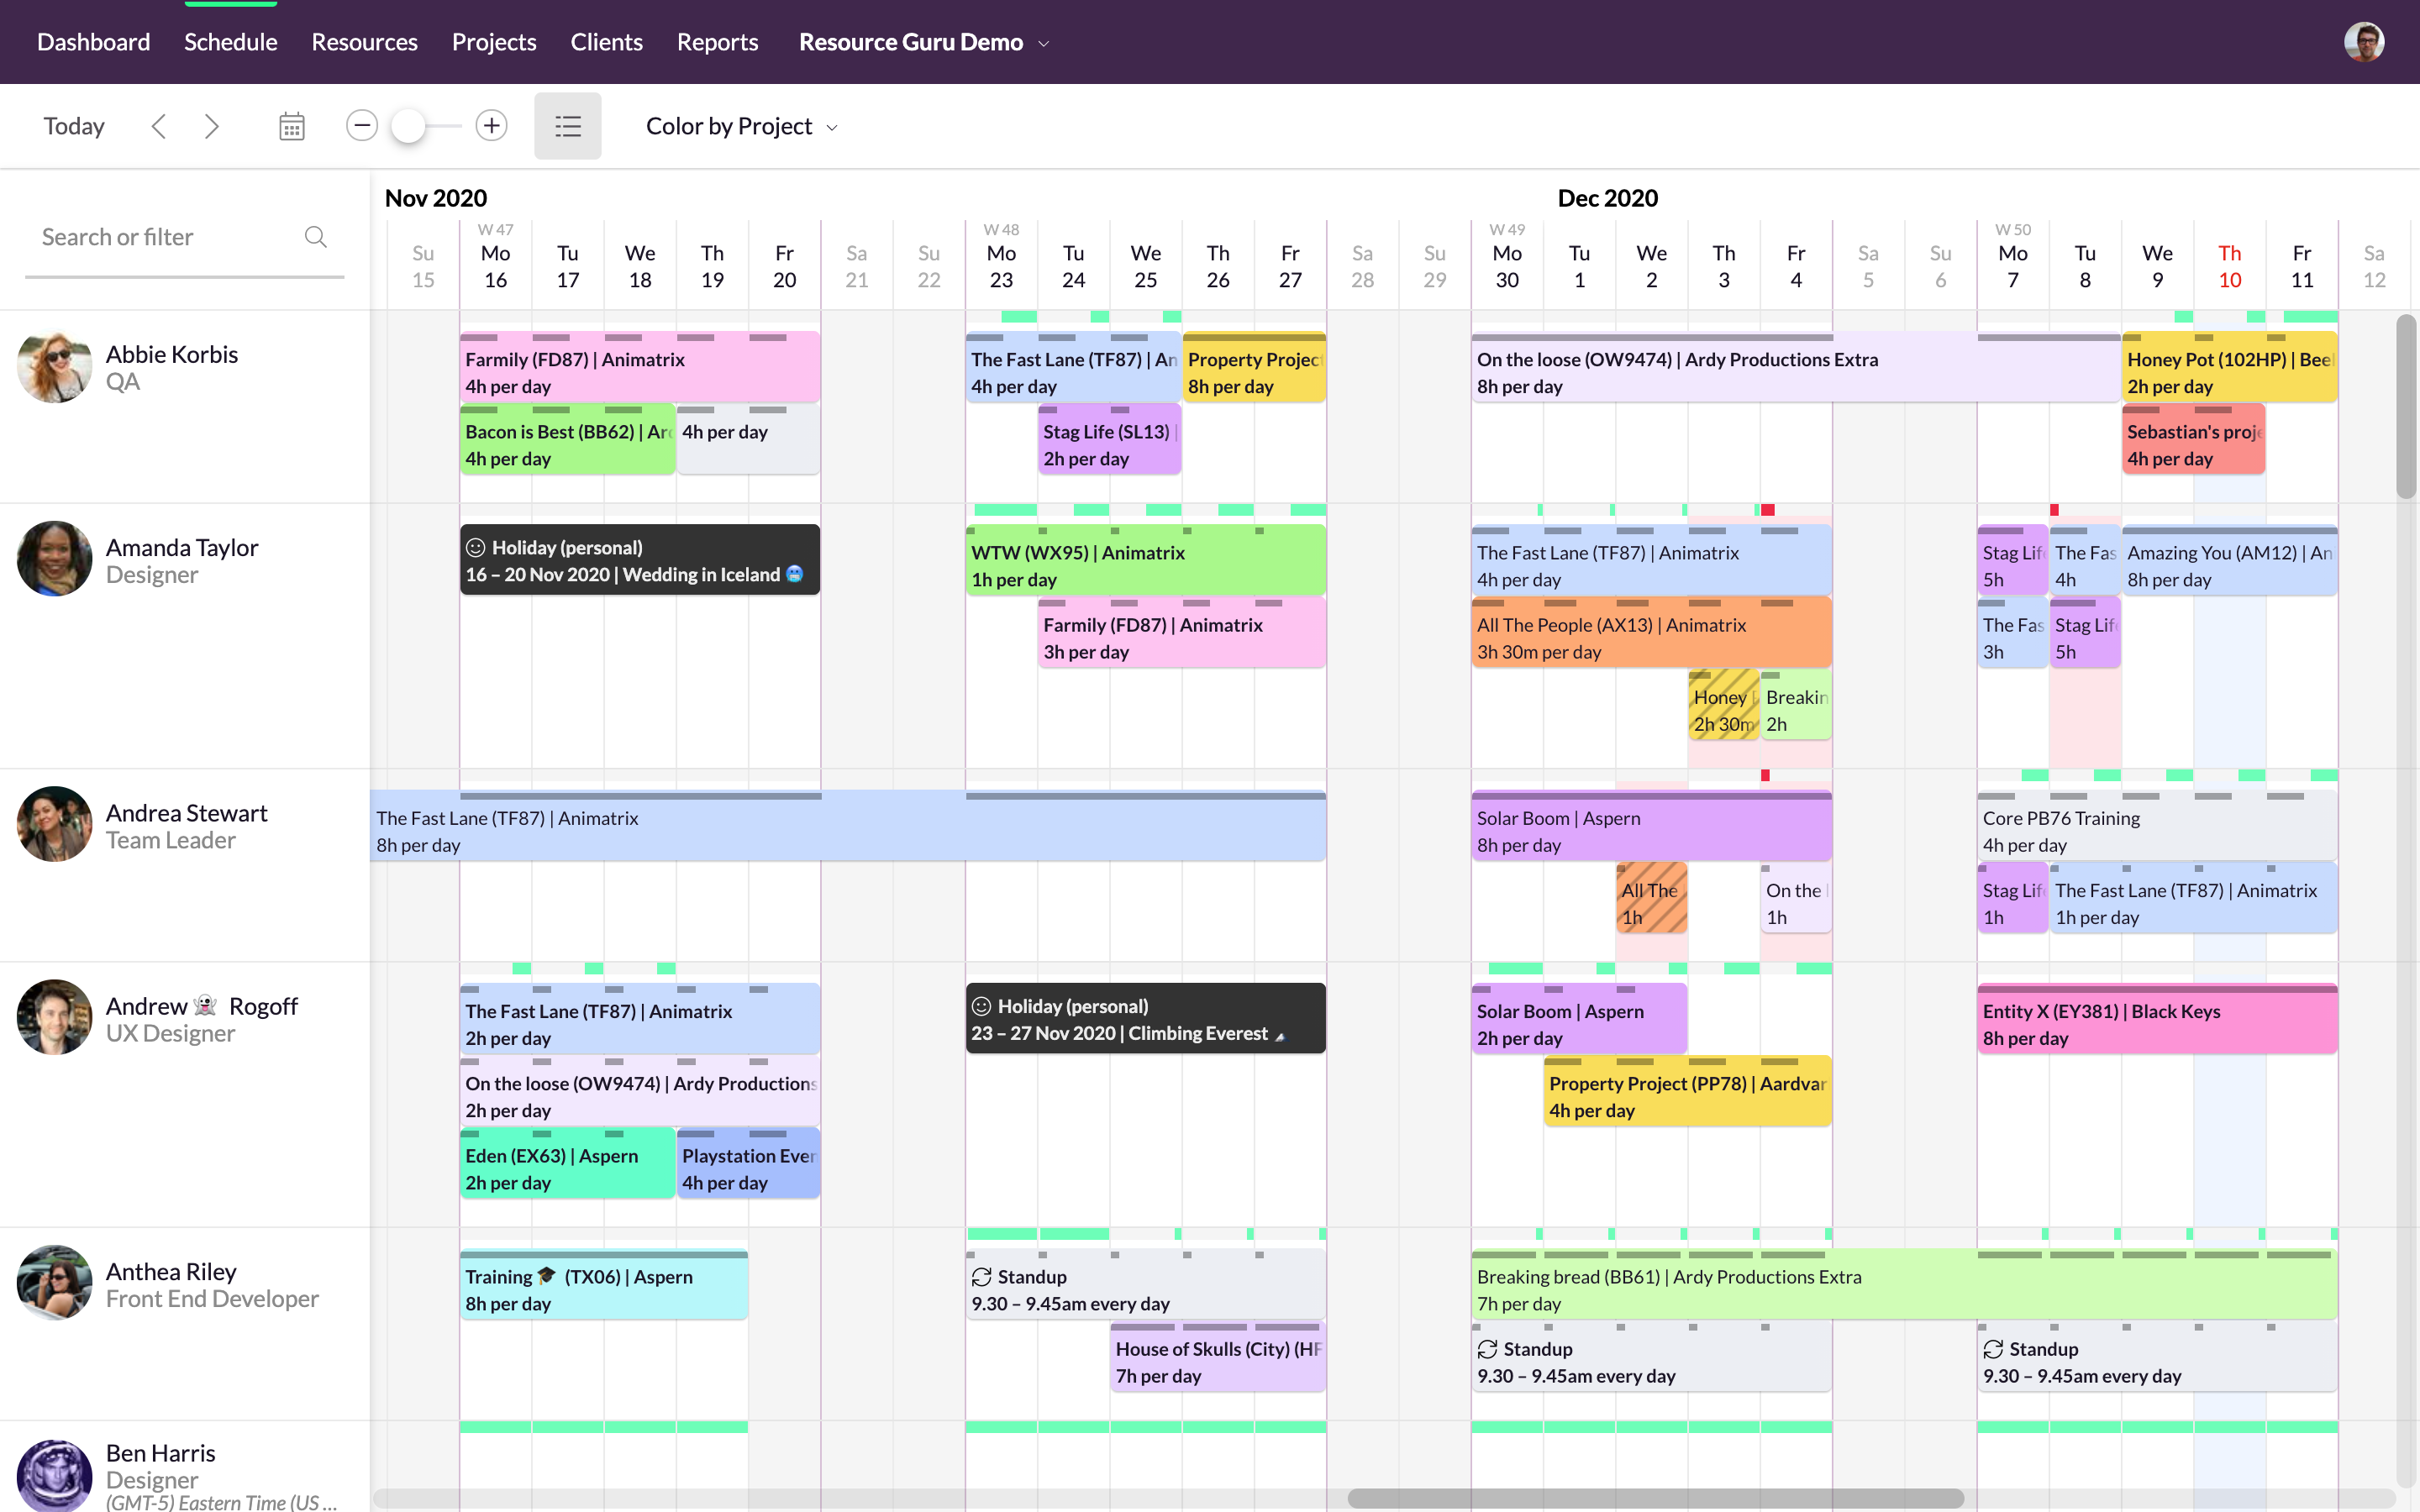 Review of Resource Guru's schedule dashboard screenshot.